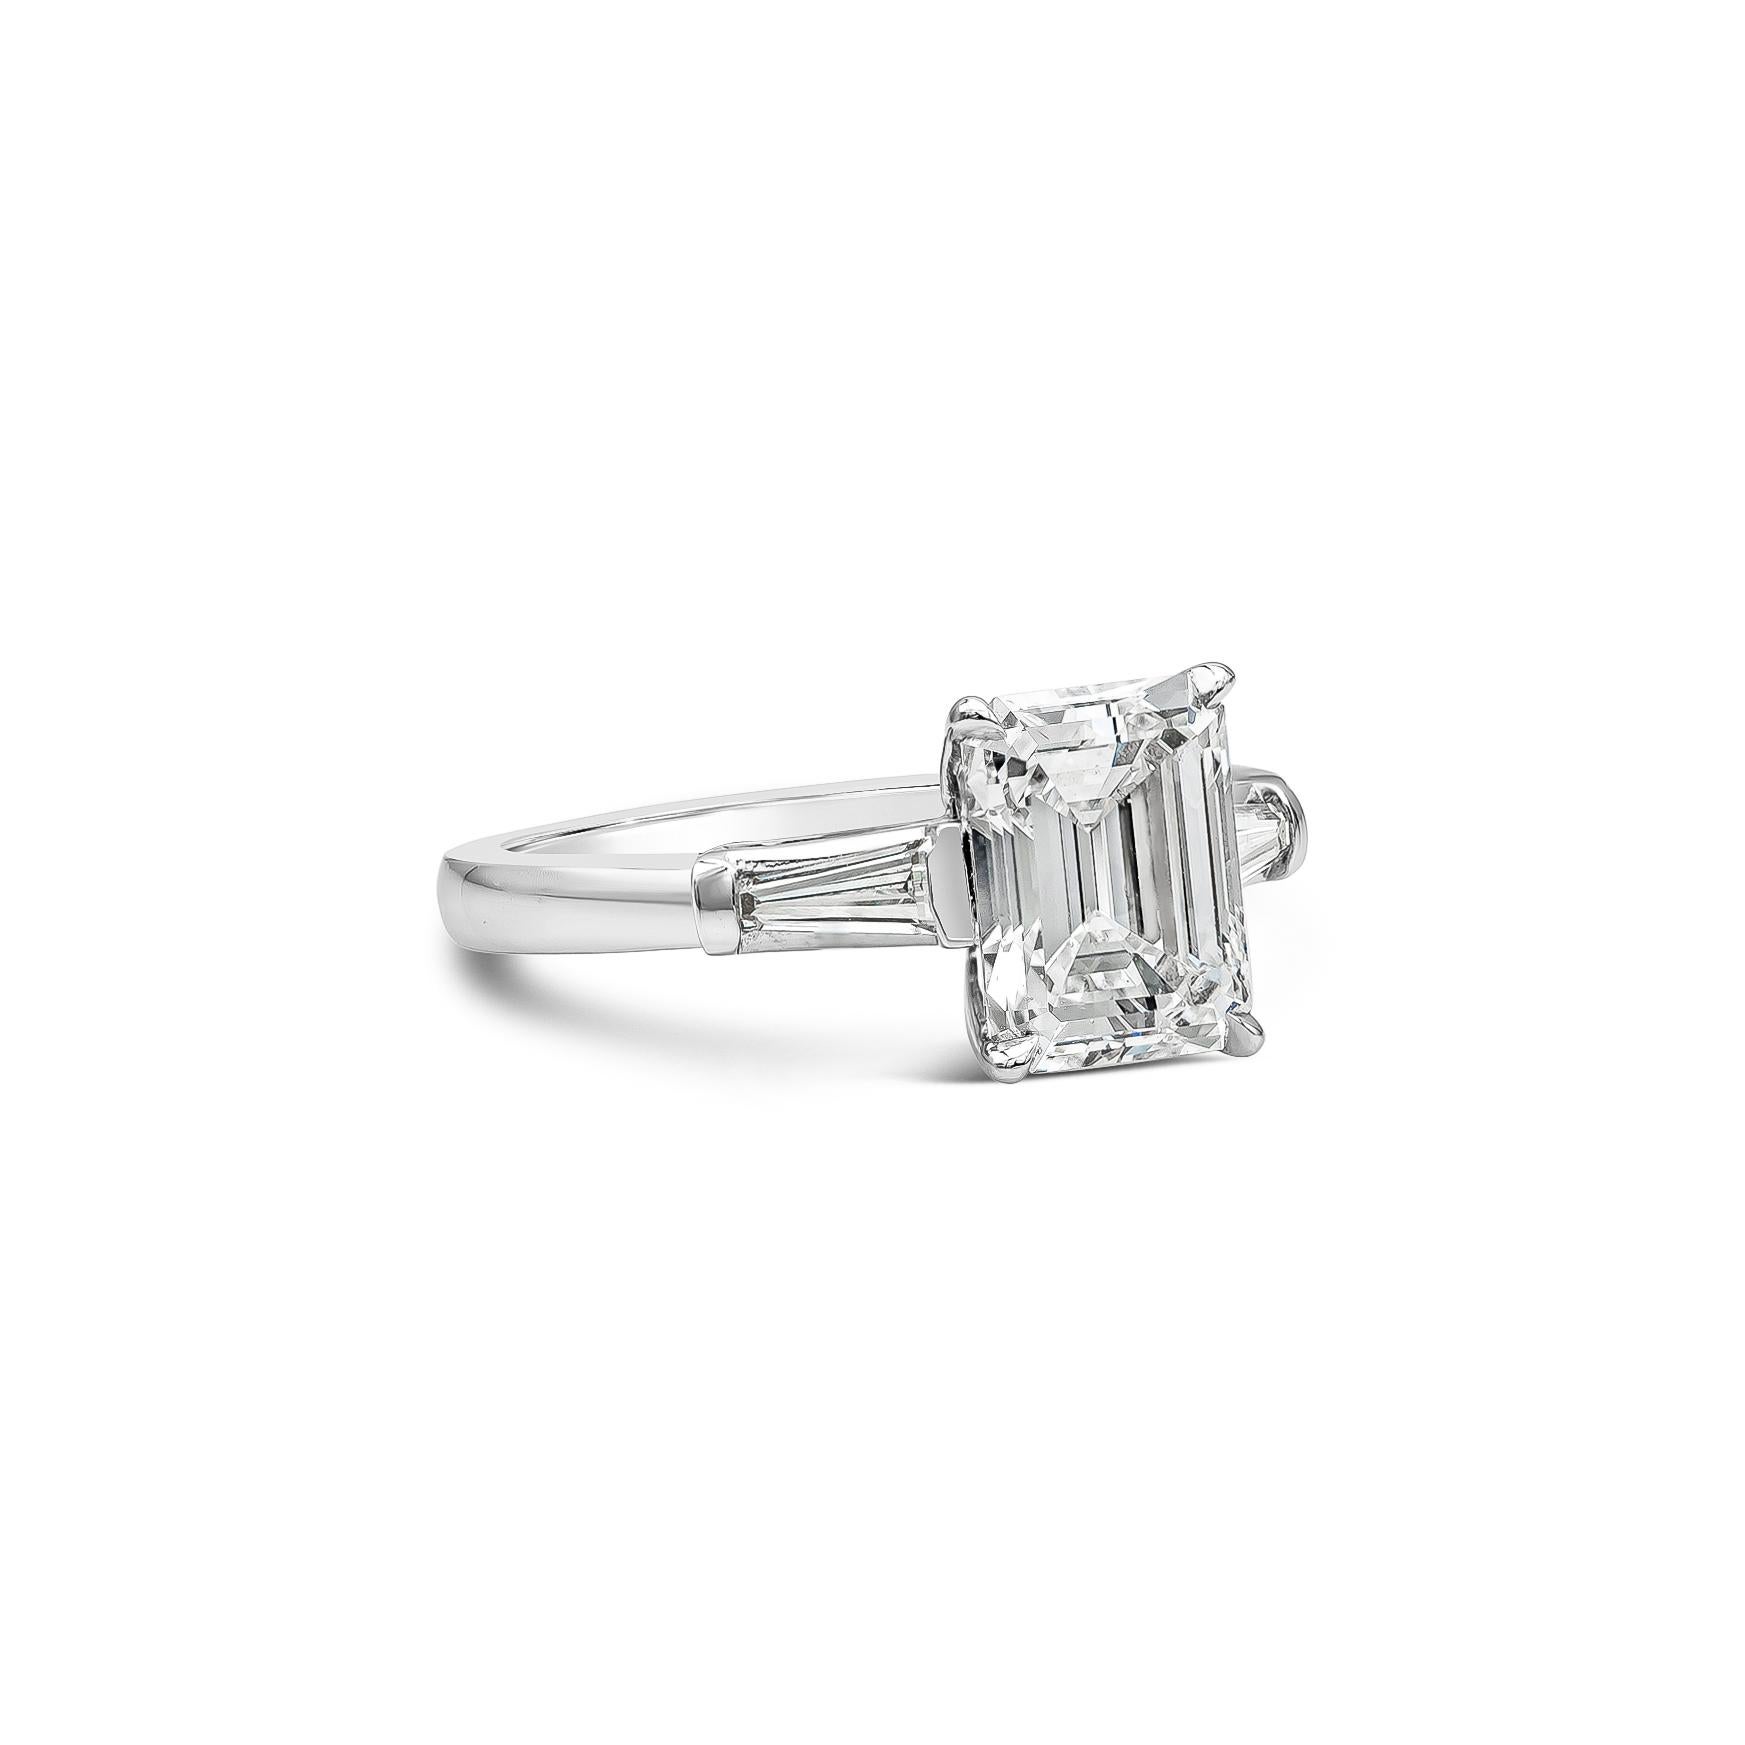 3 diamond emerald cut ring